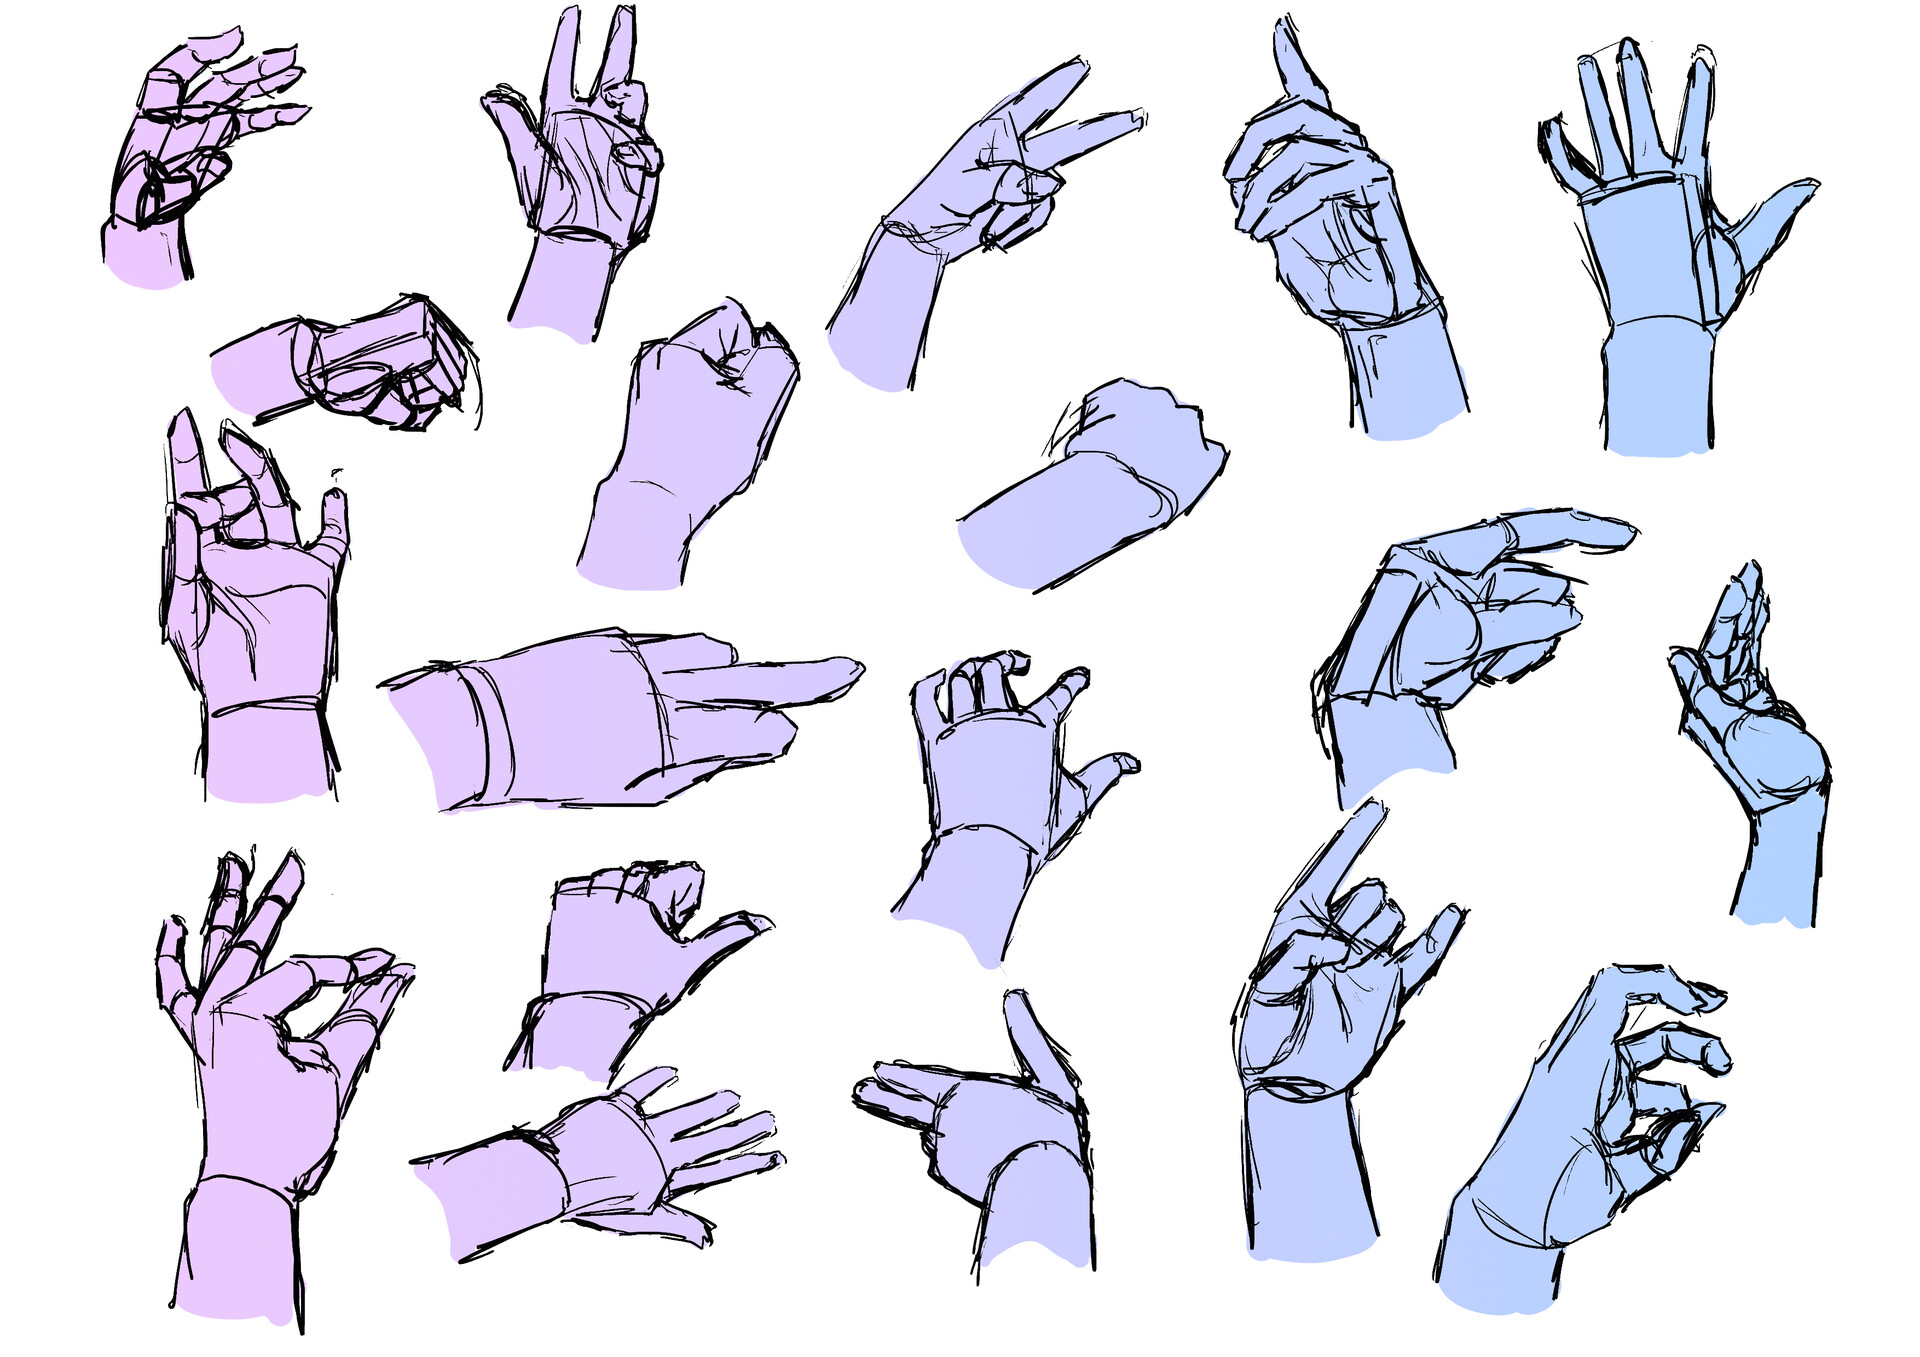 ArtStation - Hands anatomy study - Sketch